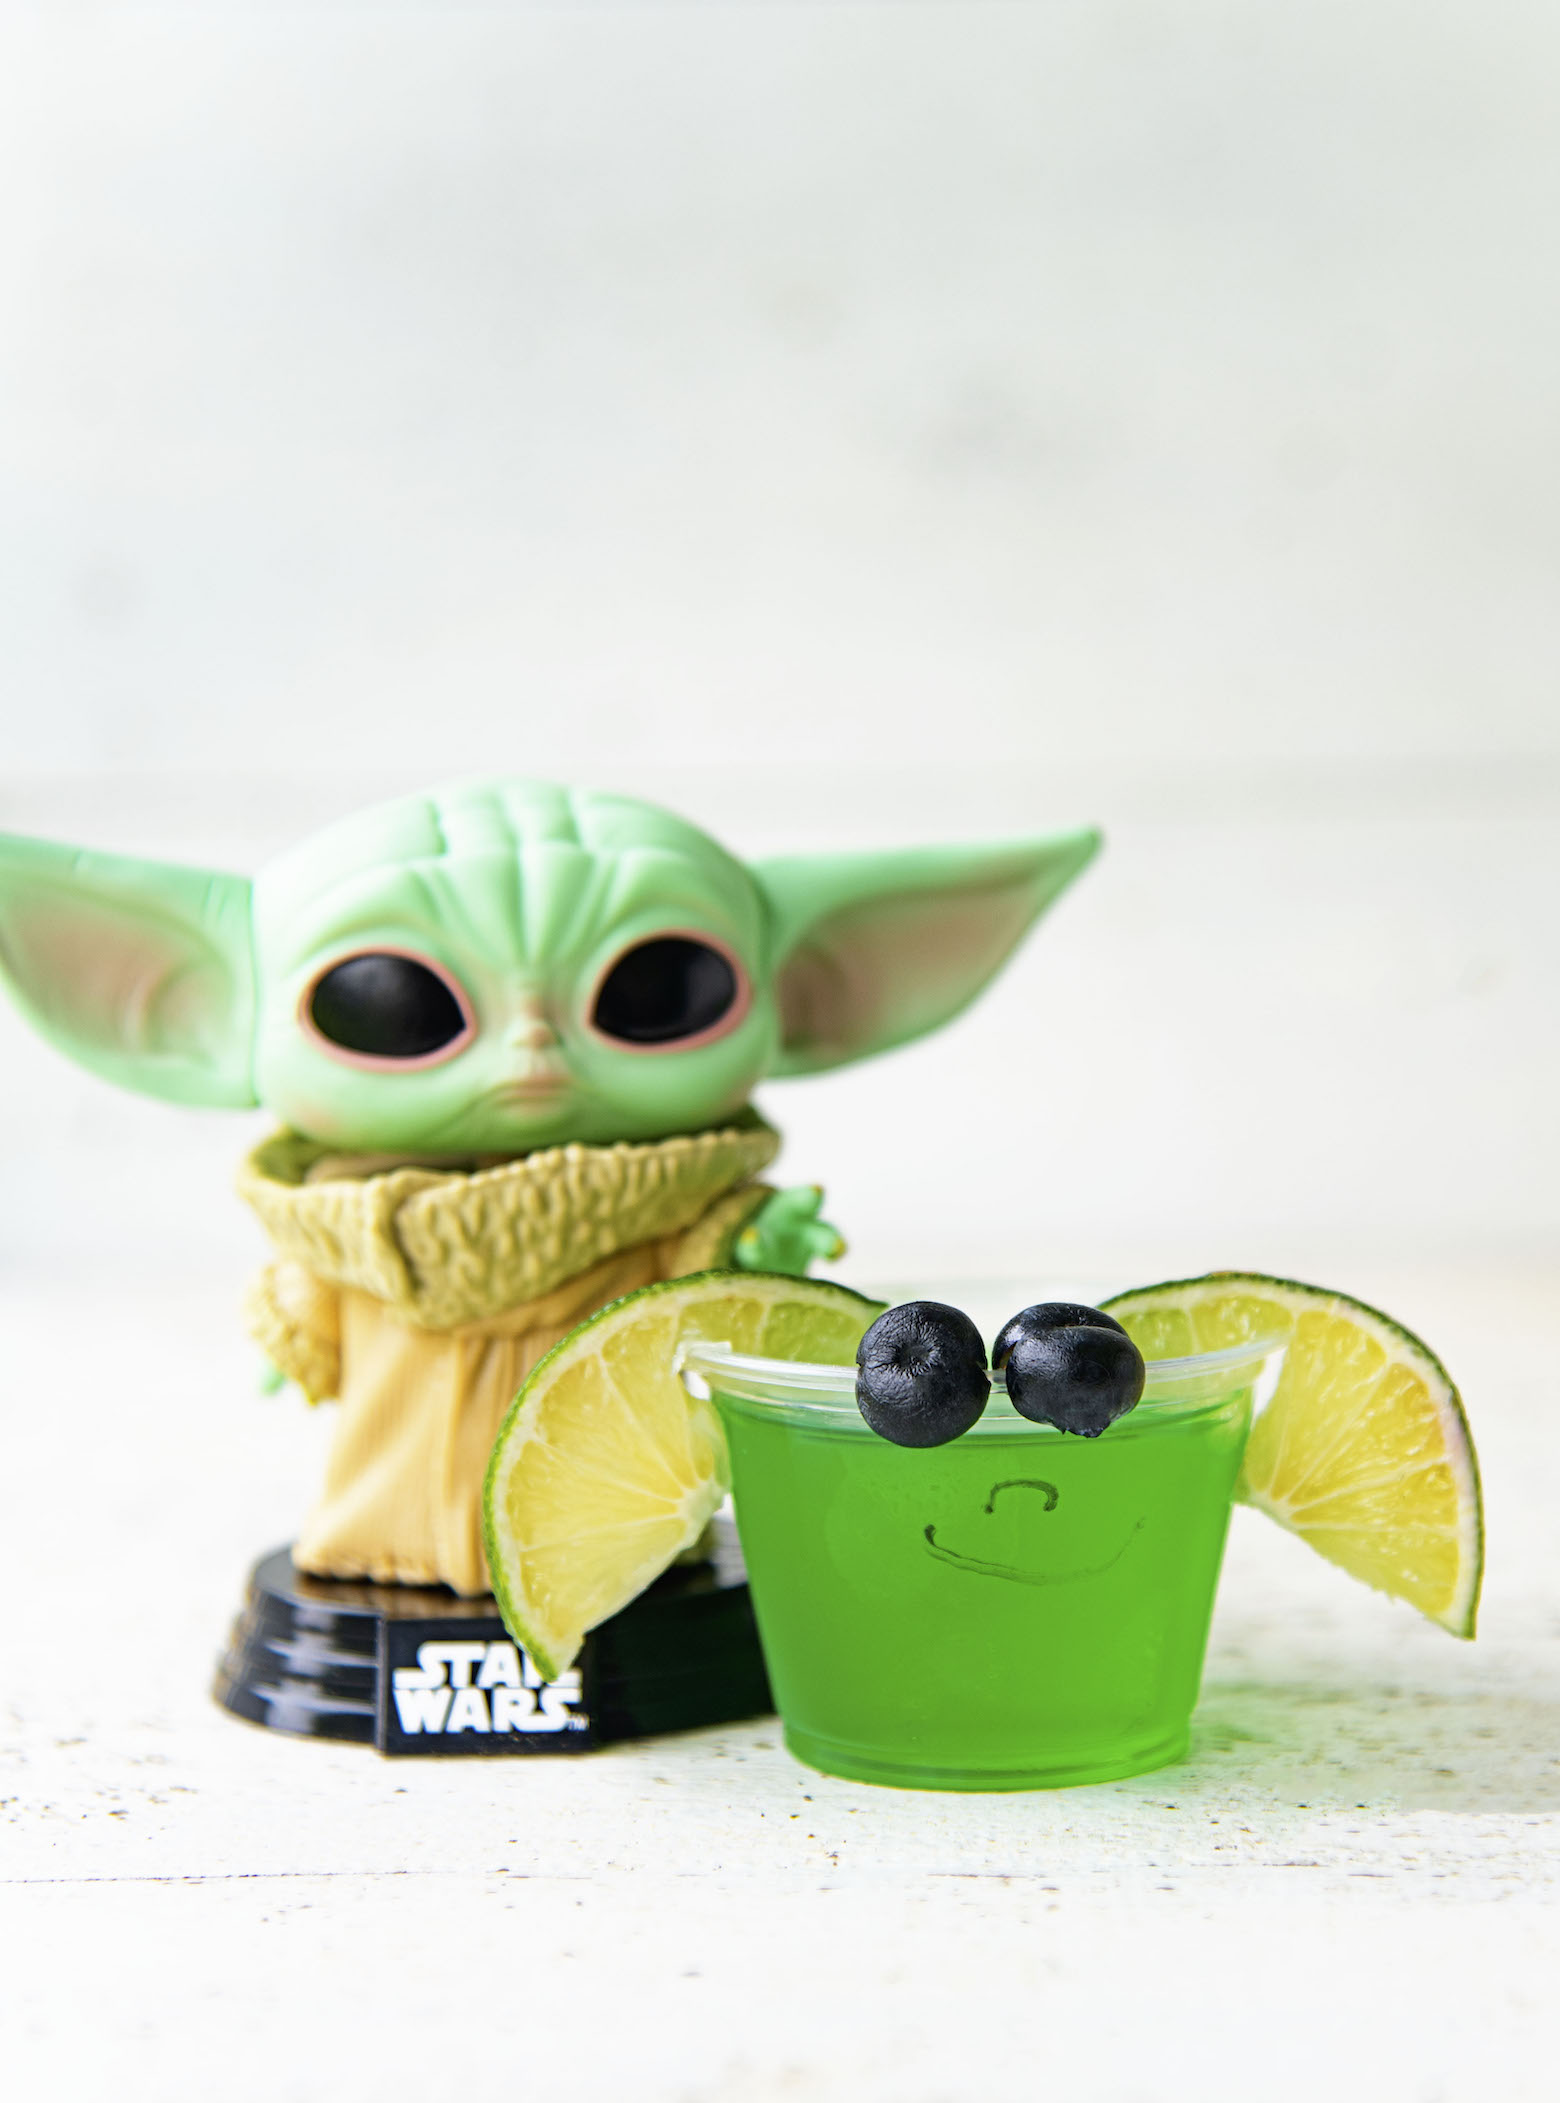 Single Baby Yoda Jello Shot with Grogu figurine behind it.